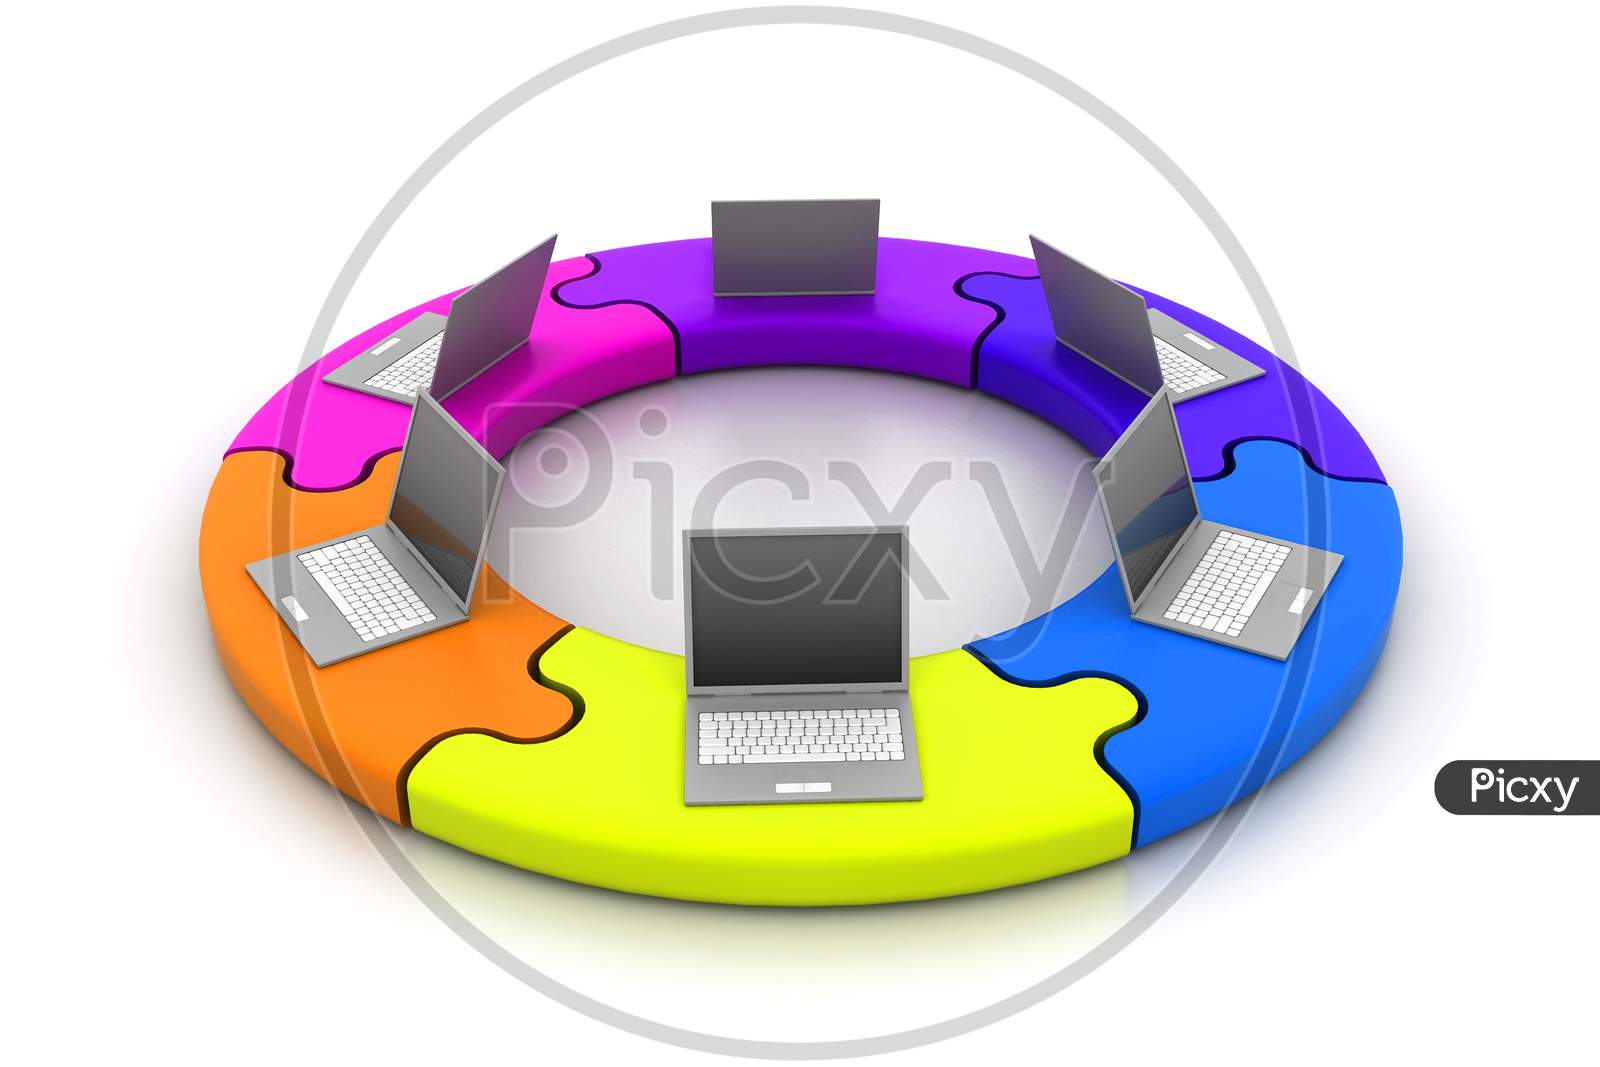 Couple Computers on a Multi-Coloured Circle